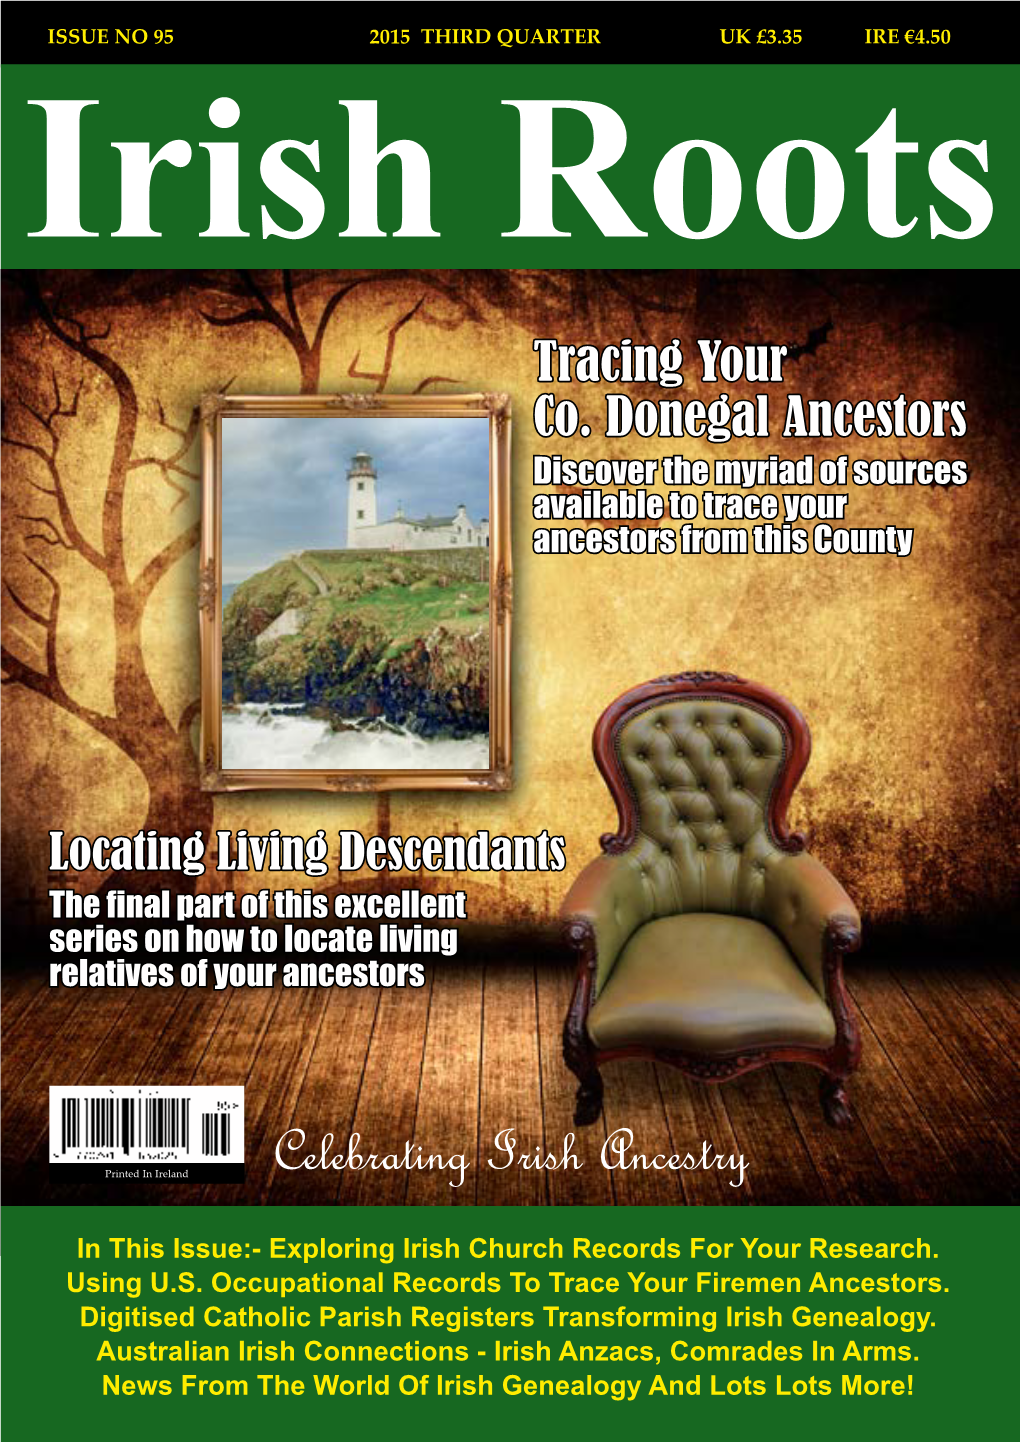 Celebrating Irish Ancestry